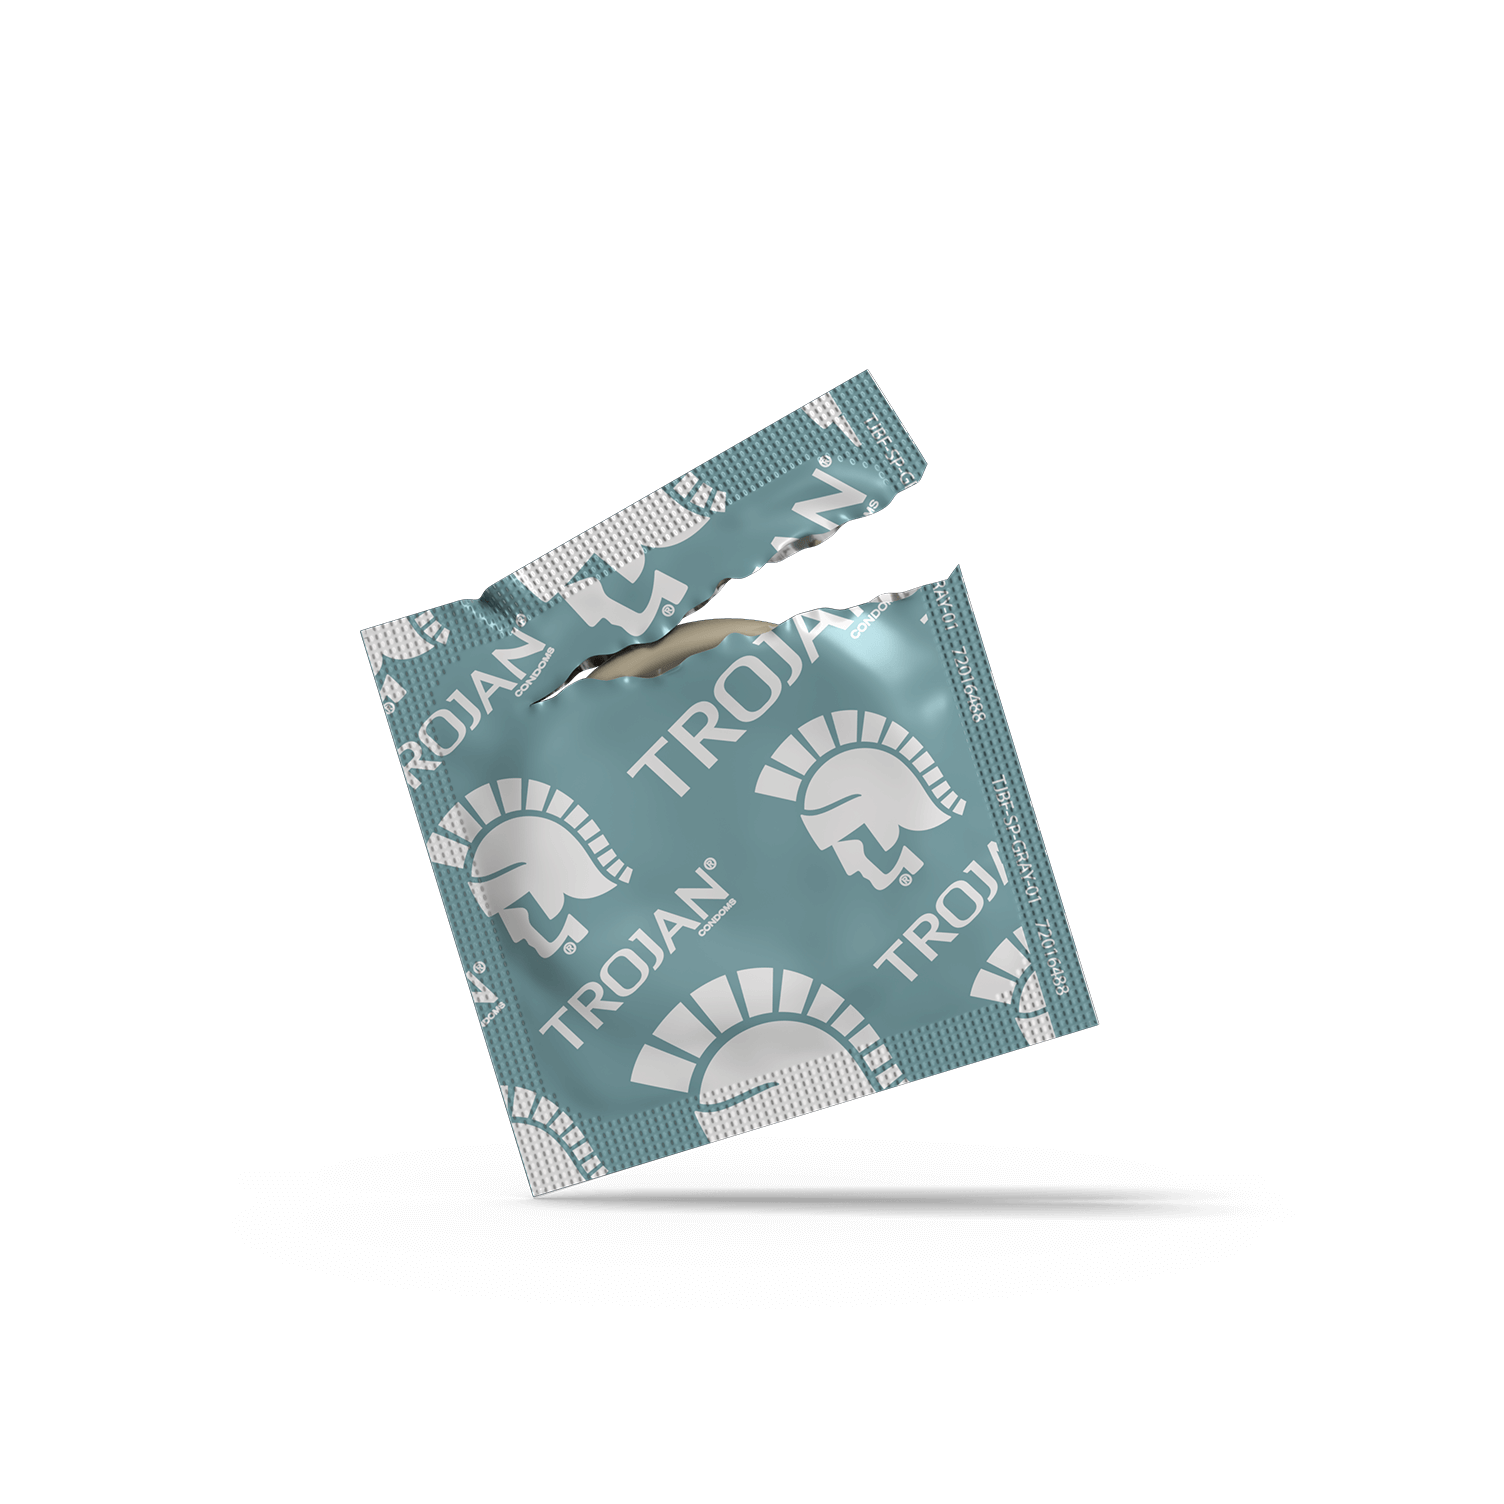 Ultra Thin Condom 12 Pack